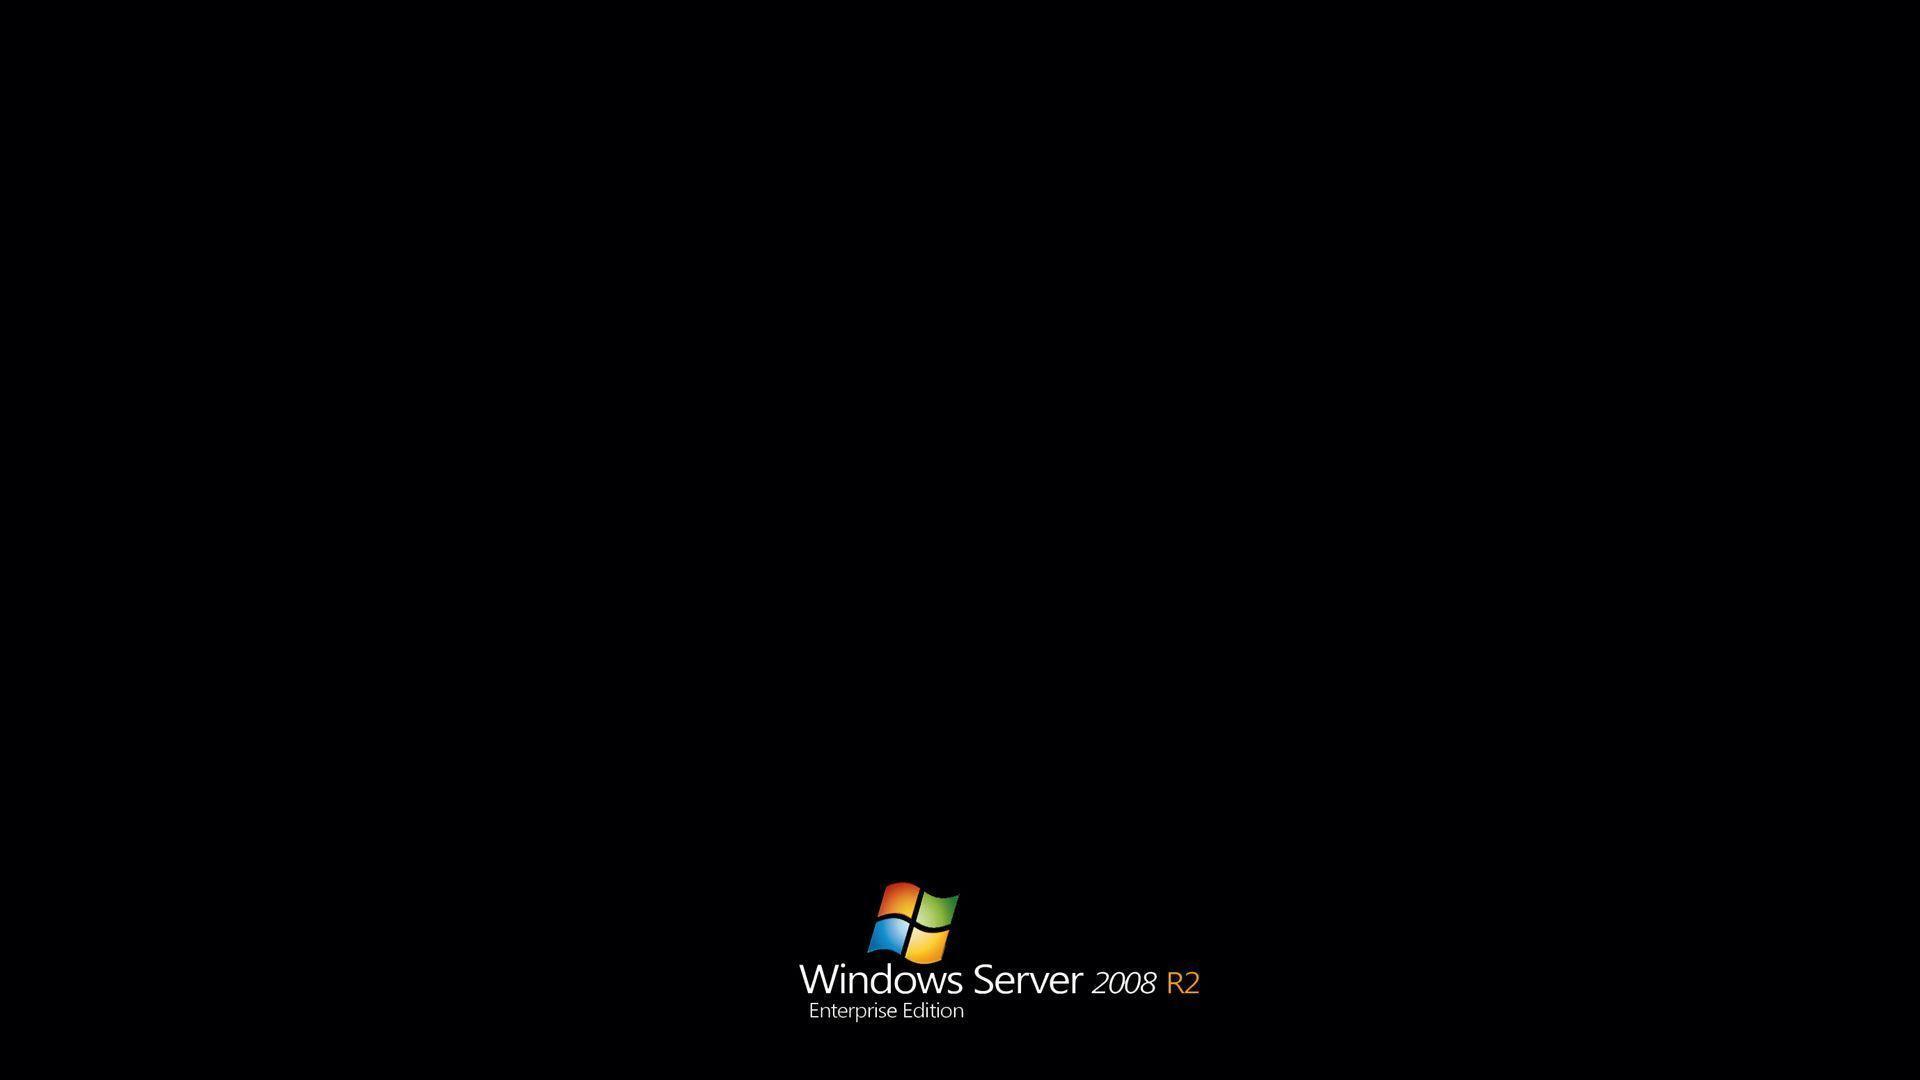 Windows Server 2008 Wallpaper 55355 Wallpaper. wallpicsize